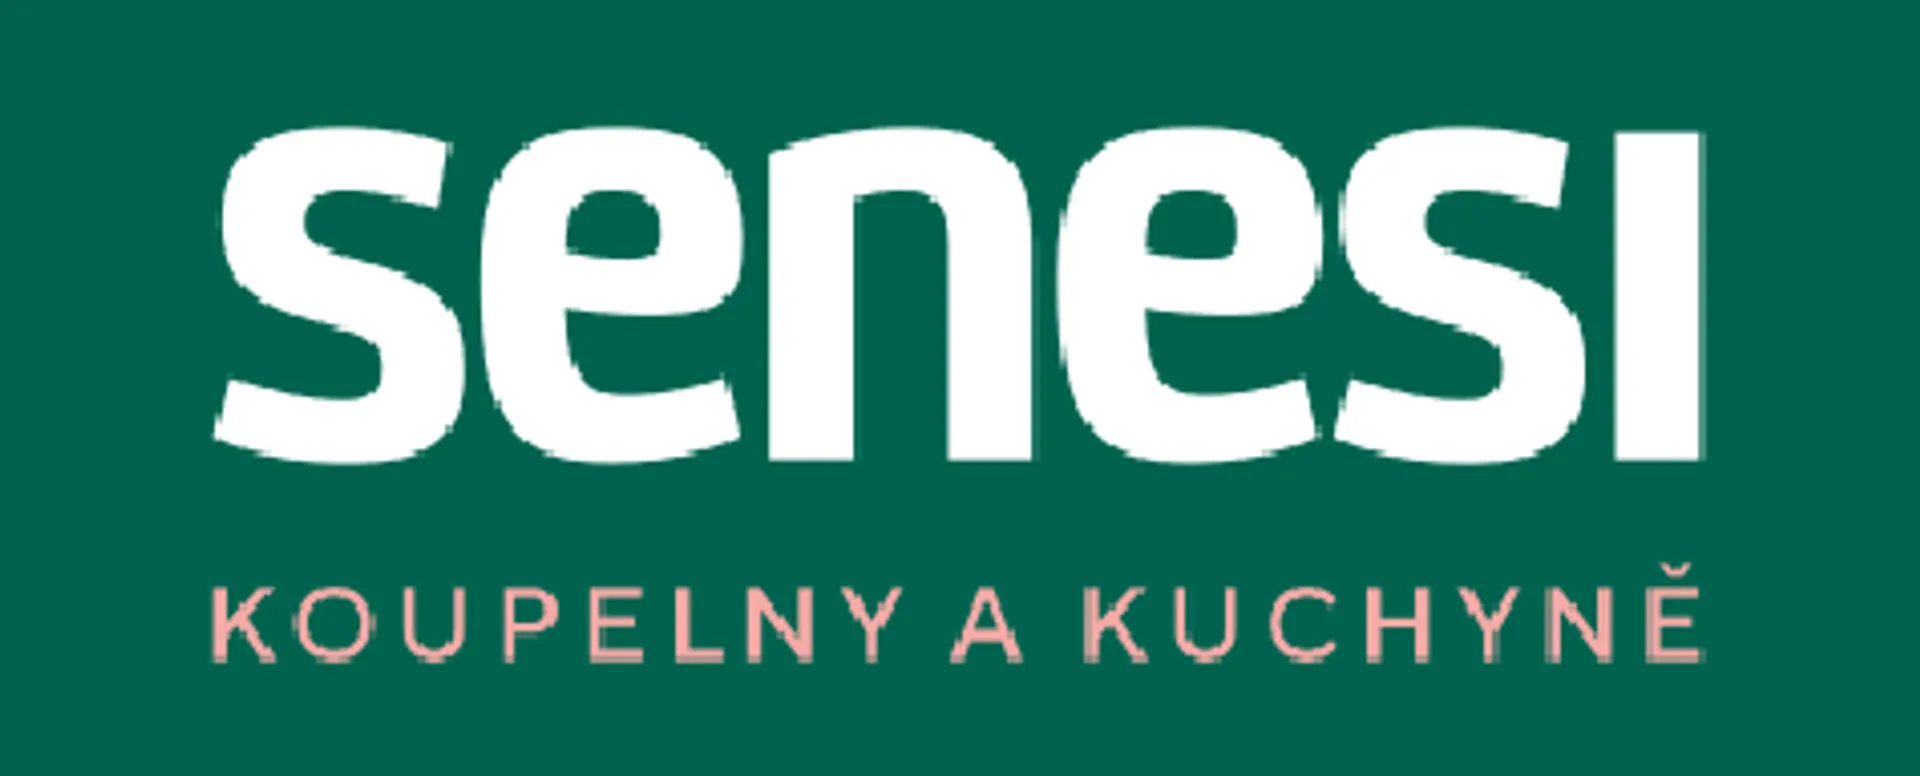 SENESI logo of current catalogue